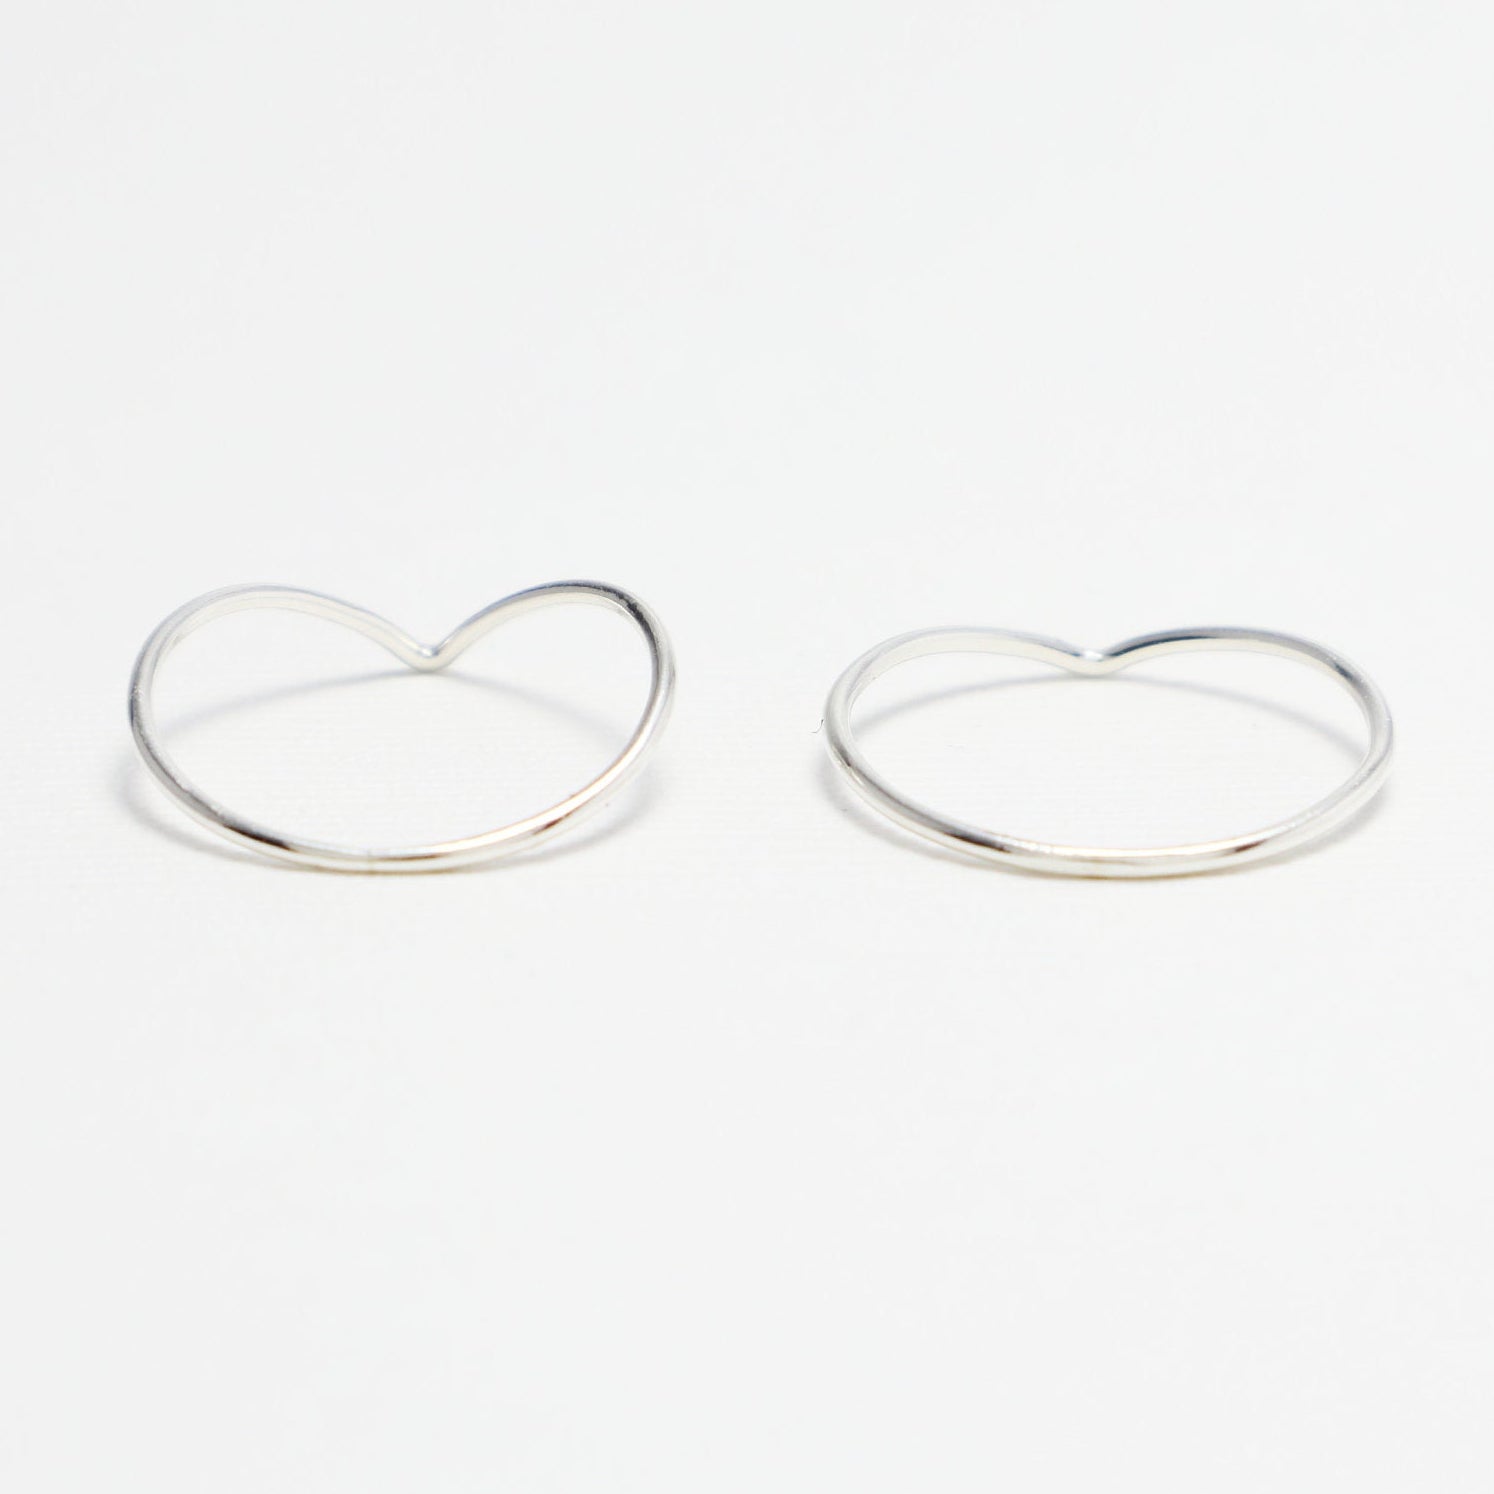 The 2 Esprit Rings